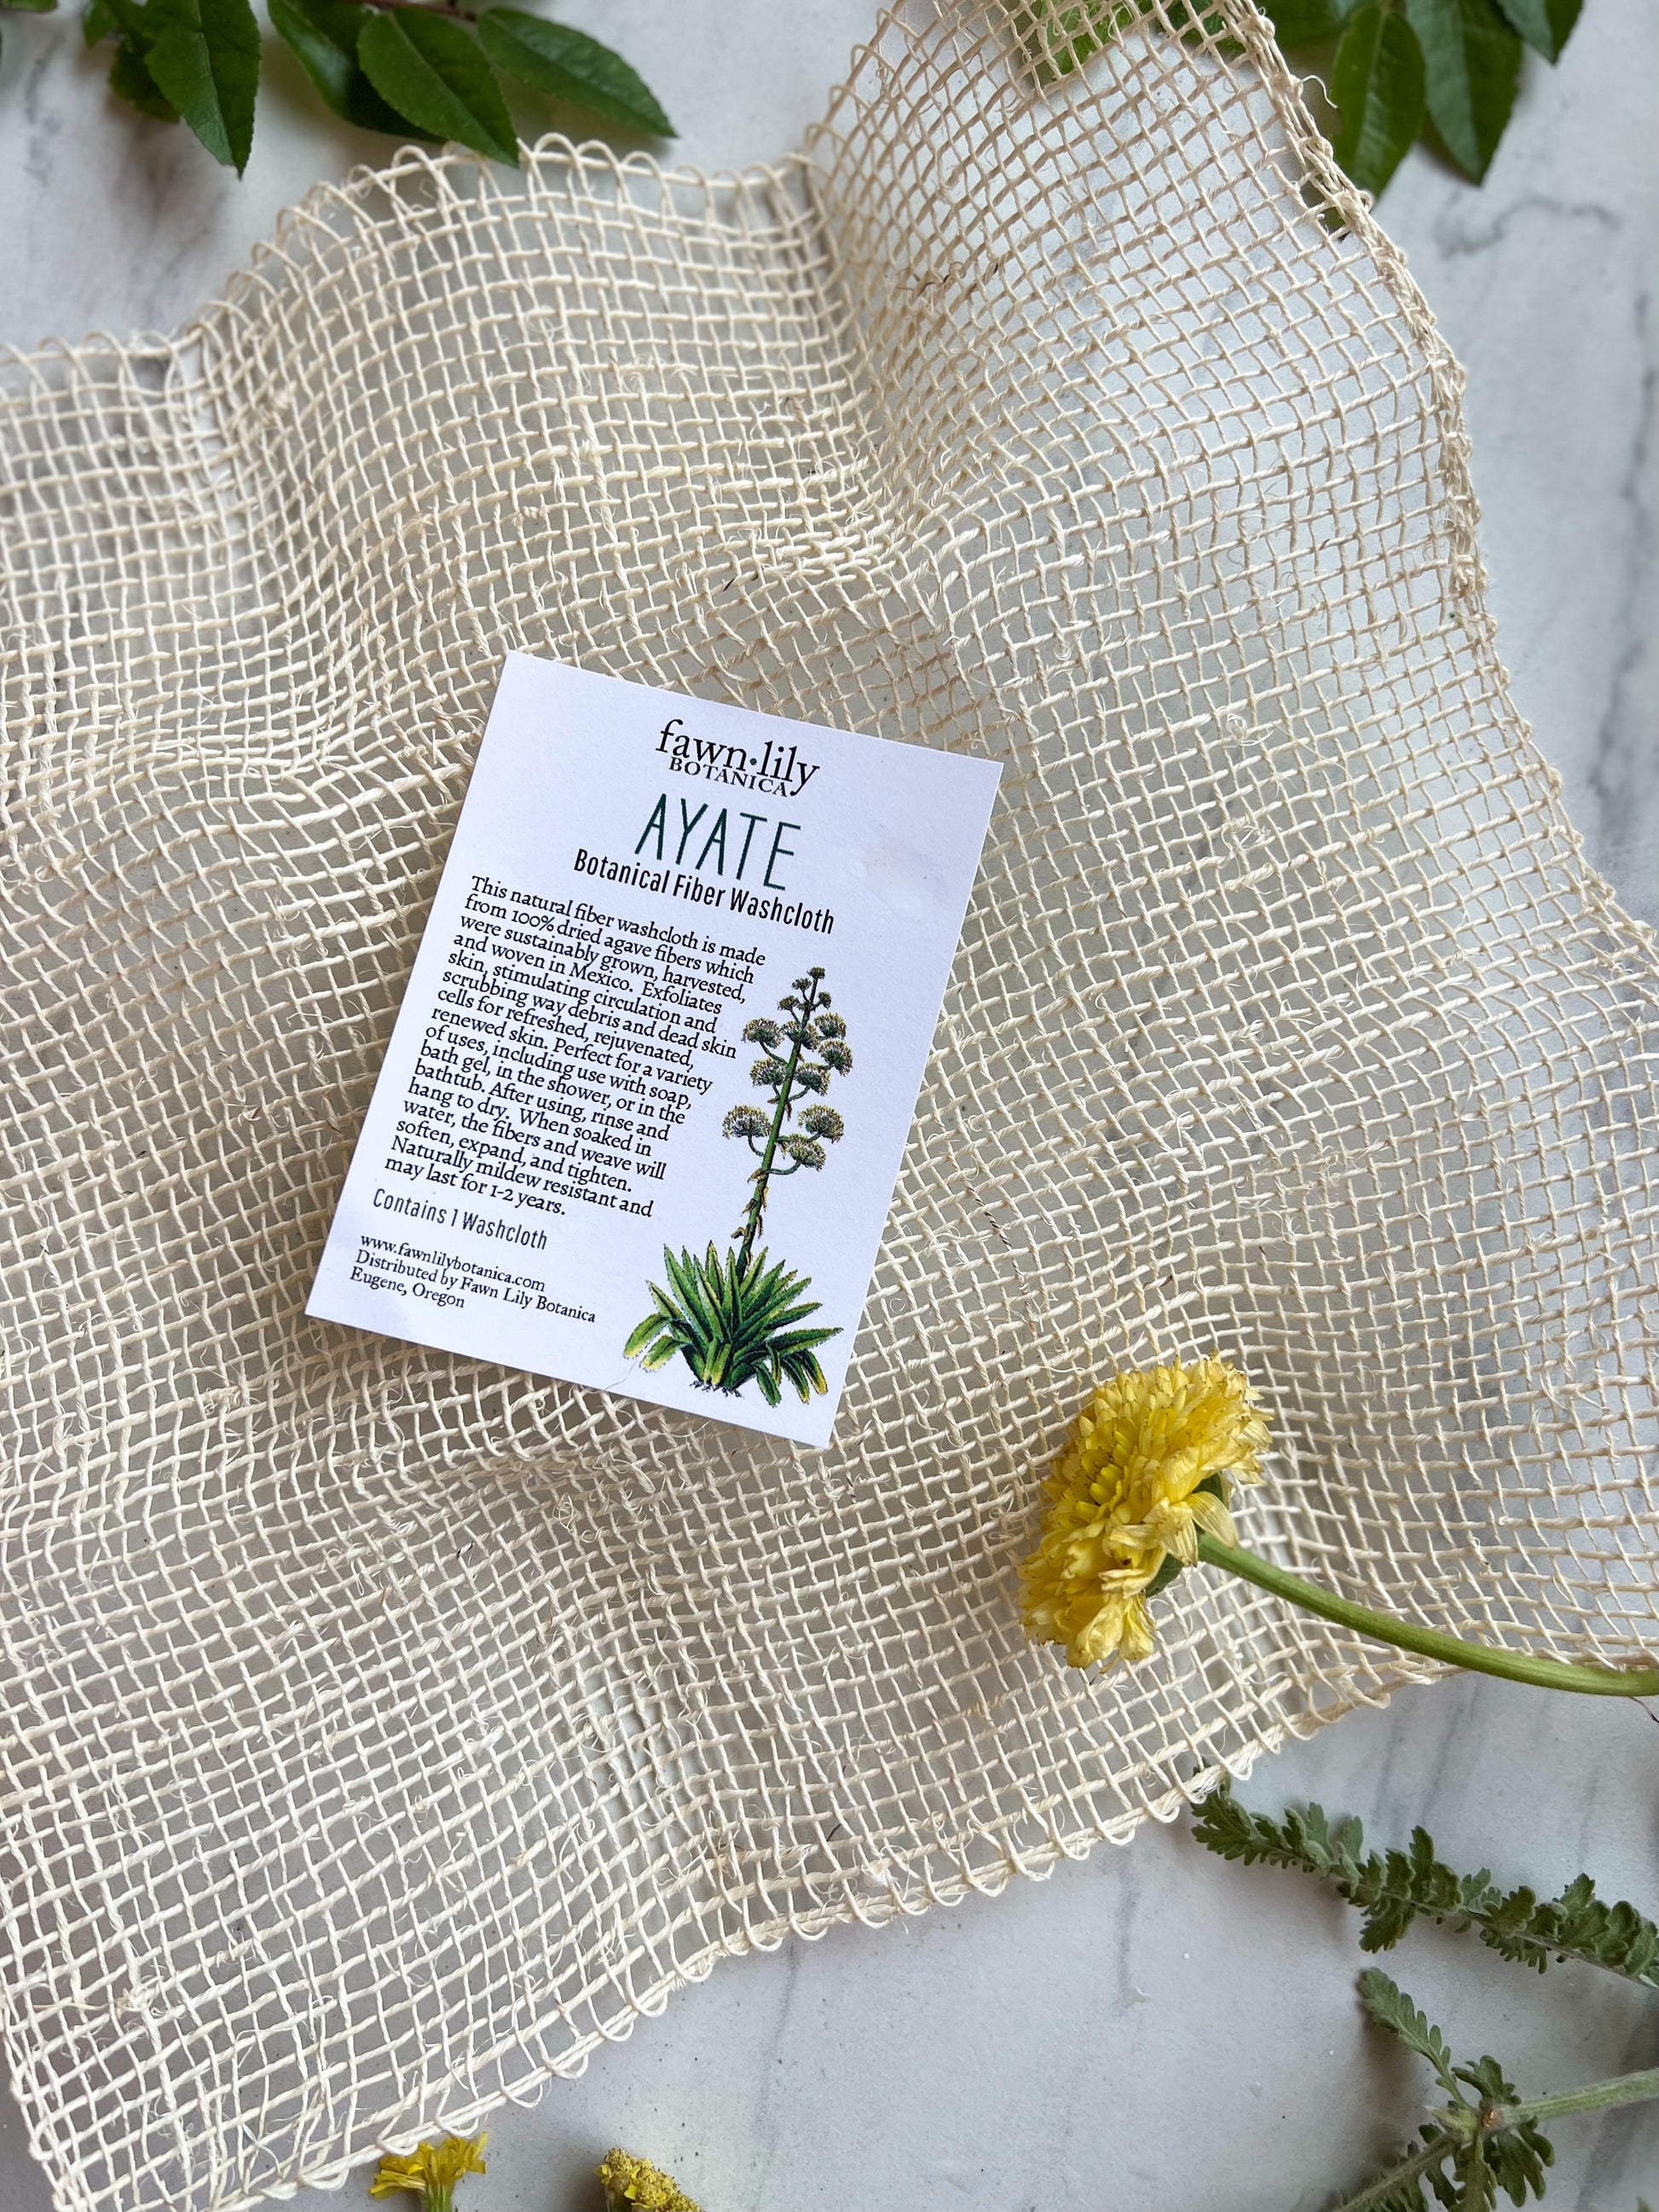 Ayate Botanical Agave Fiber Washcloth | Fawn Lily Botanica - natural eco-friendly, sustainable, biodegradable botanical plant-based washcloth for body and bathing.